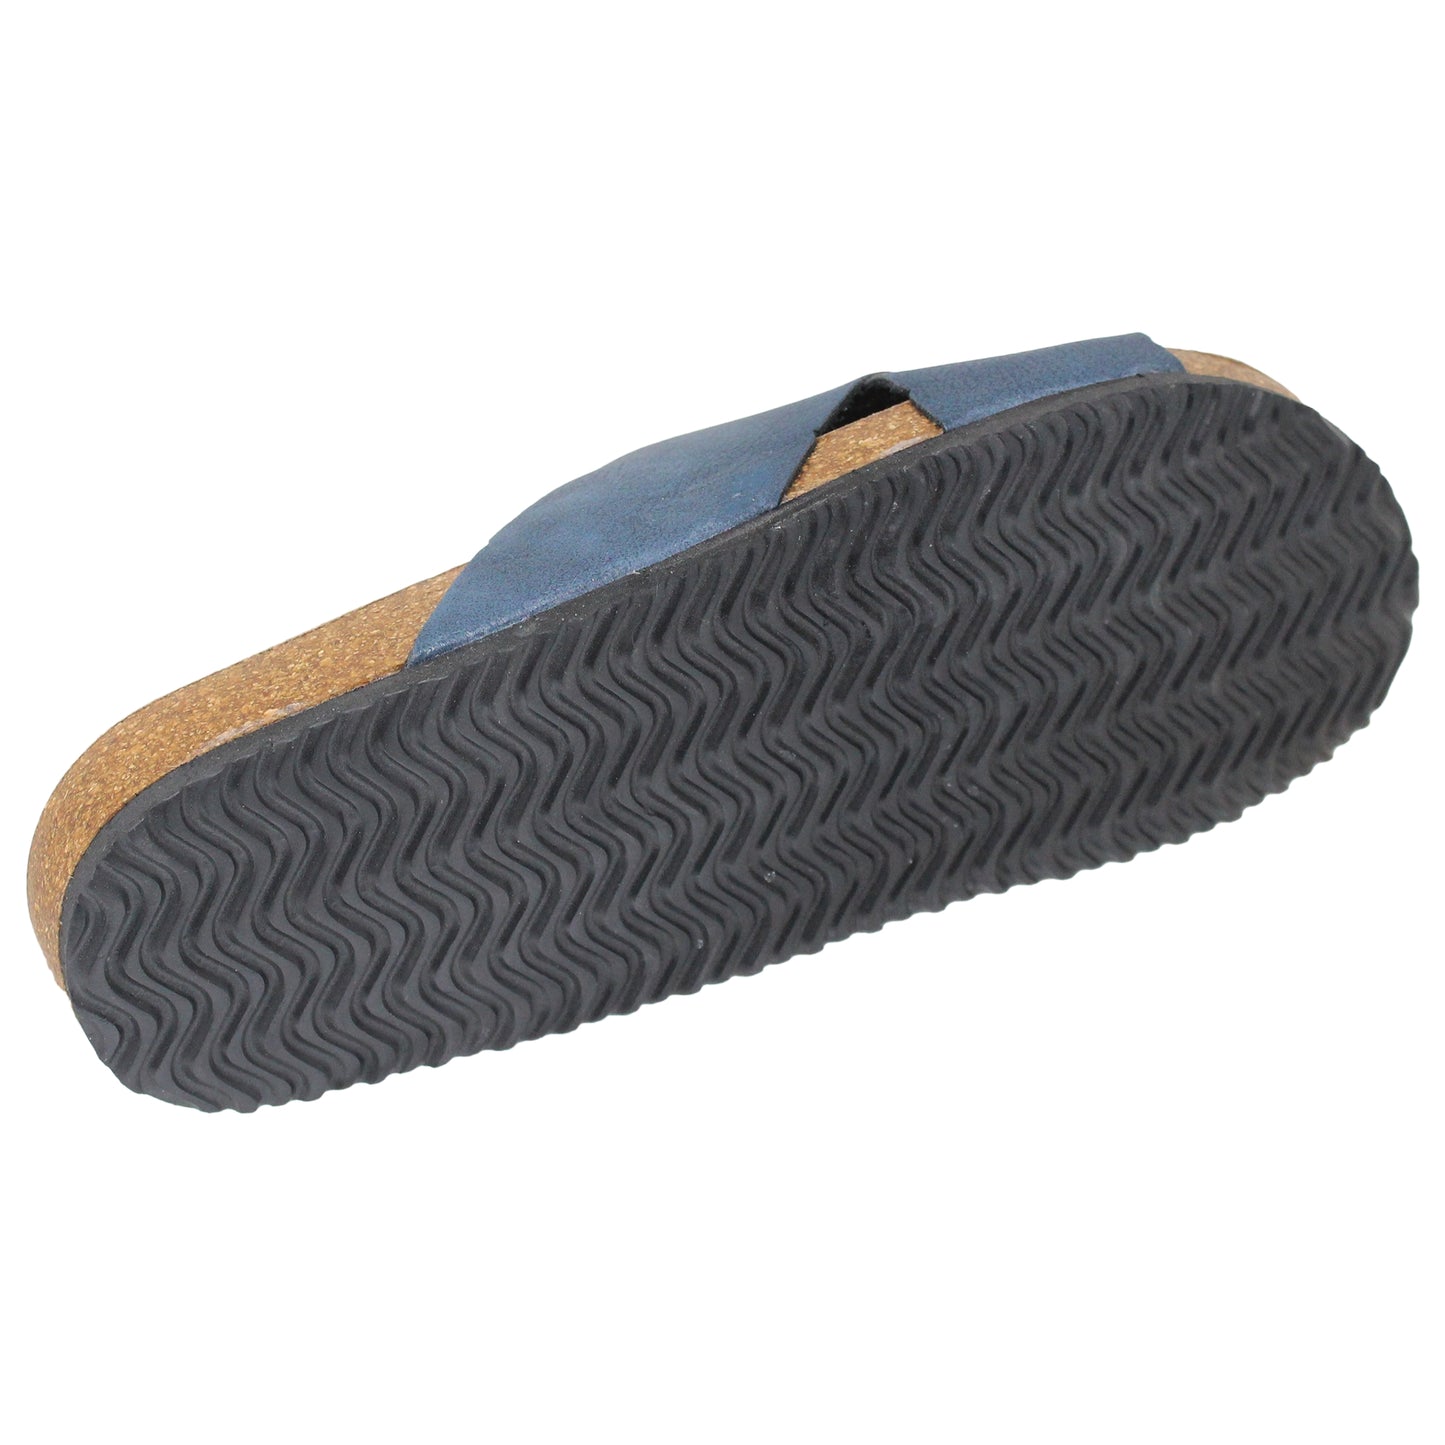 SOBEYO Classic Cork Sandals Criss-Cross Strap Slip On Navy Blue